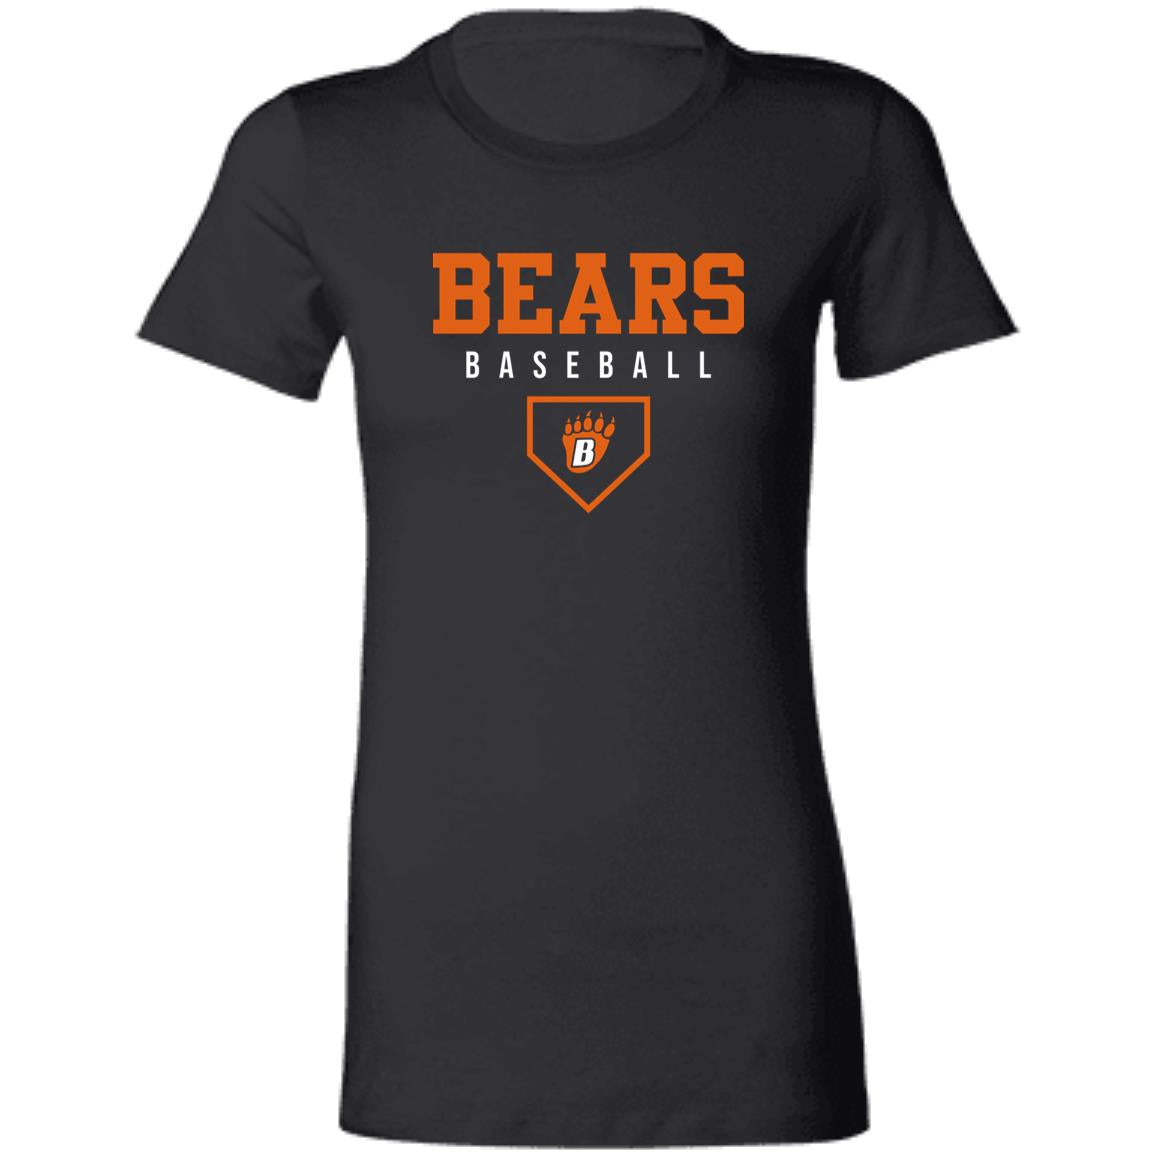 WBLHSB Bears Baseball Women's T-Shirt